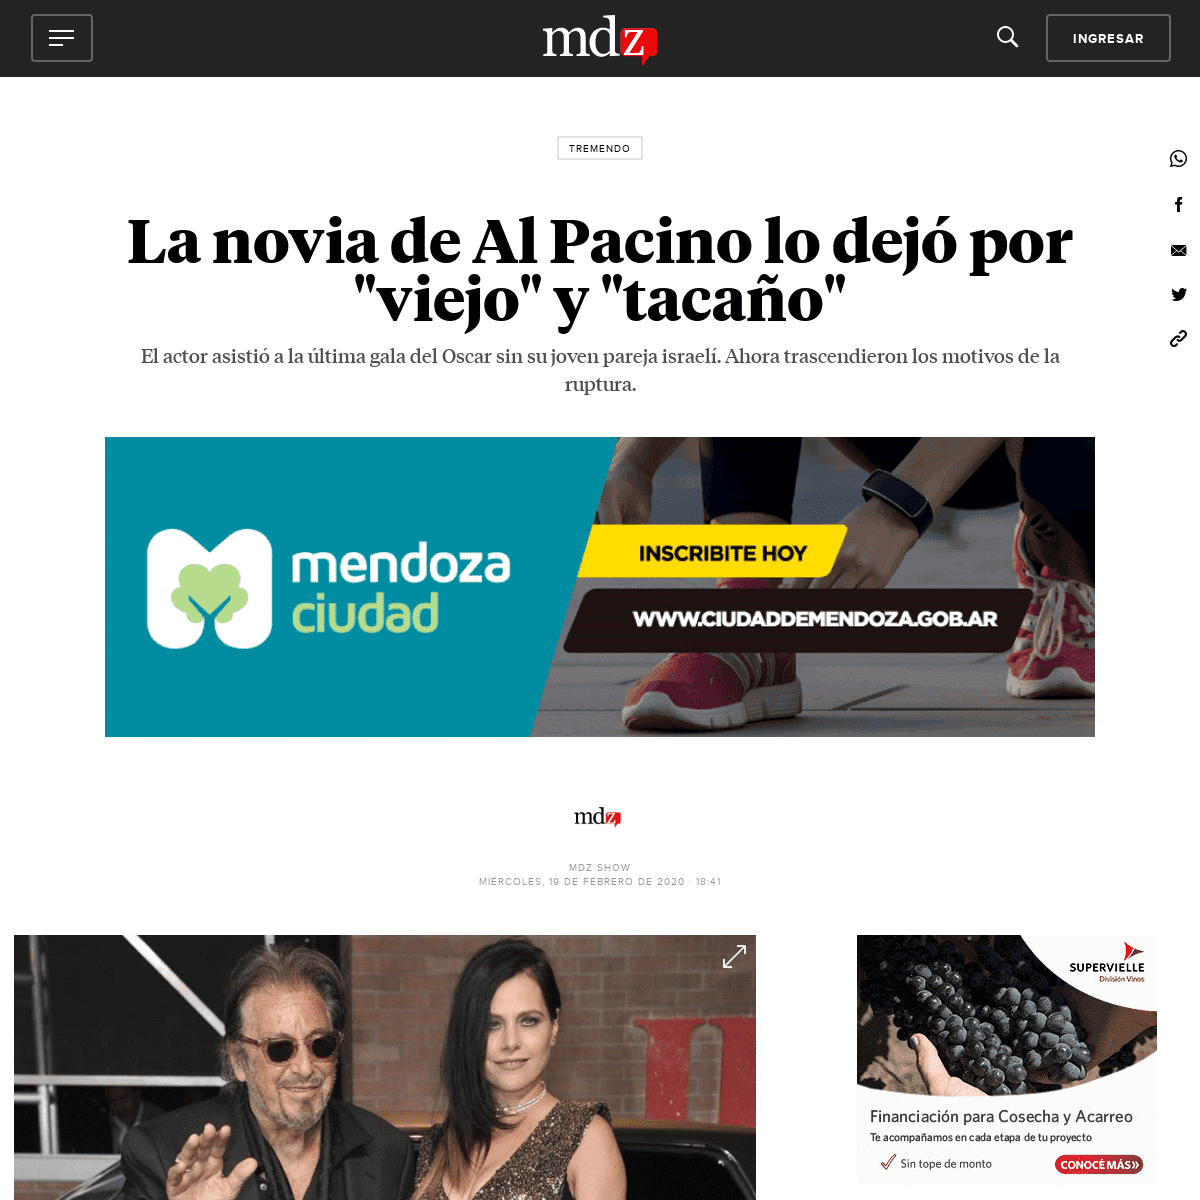 A complete backup of www.mdzol.com/mdz-show/2020/2/19/la-novia-de-al-pacino-lo-dejo-por-viejo-tacano-64203.html